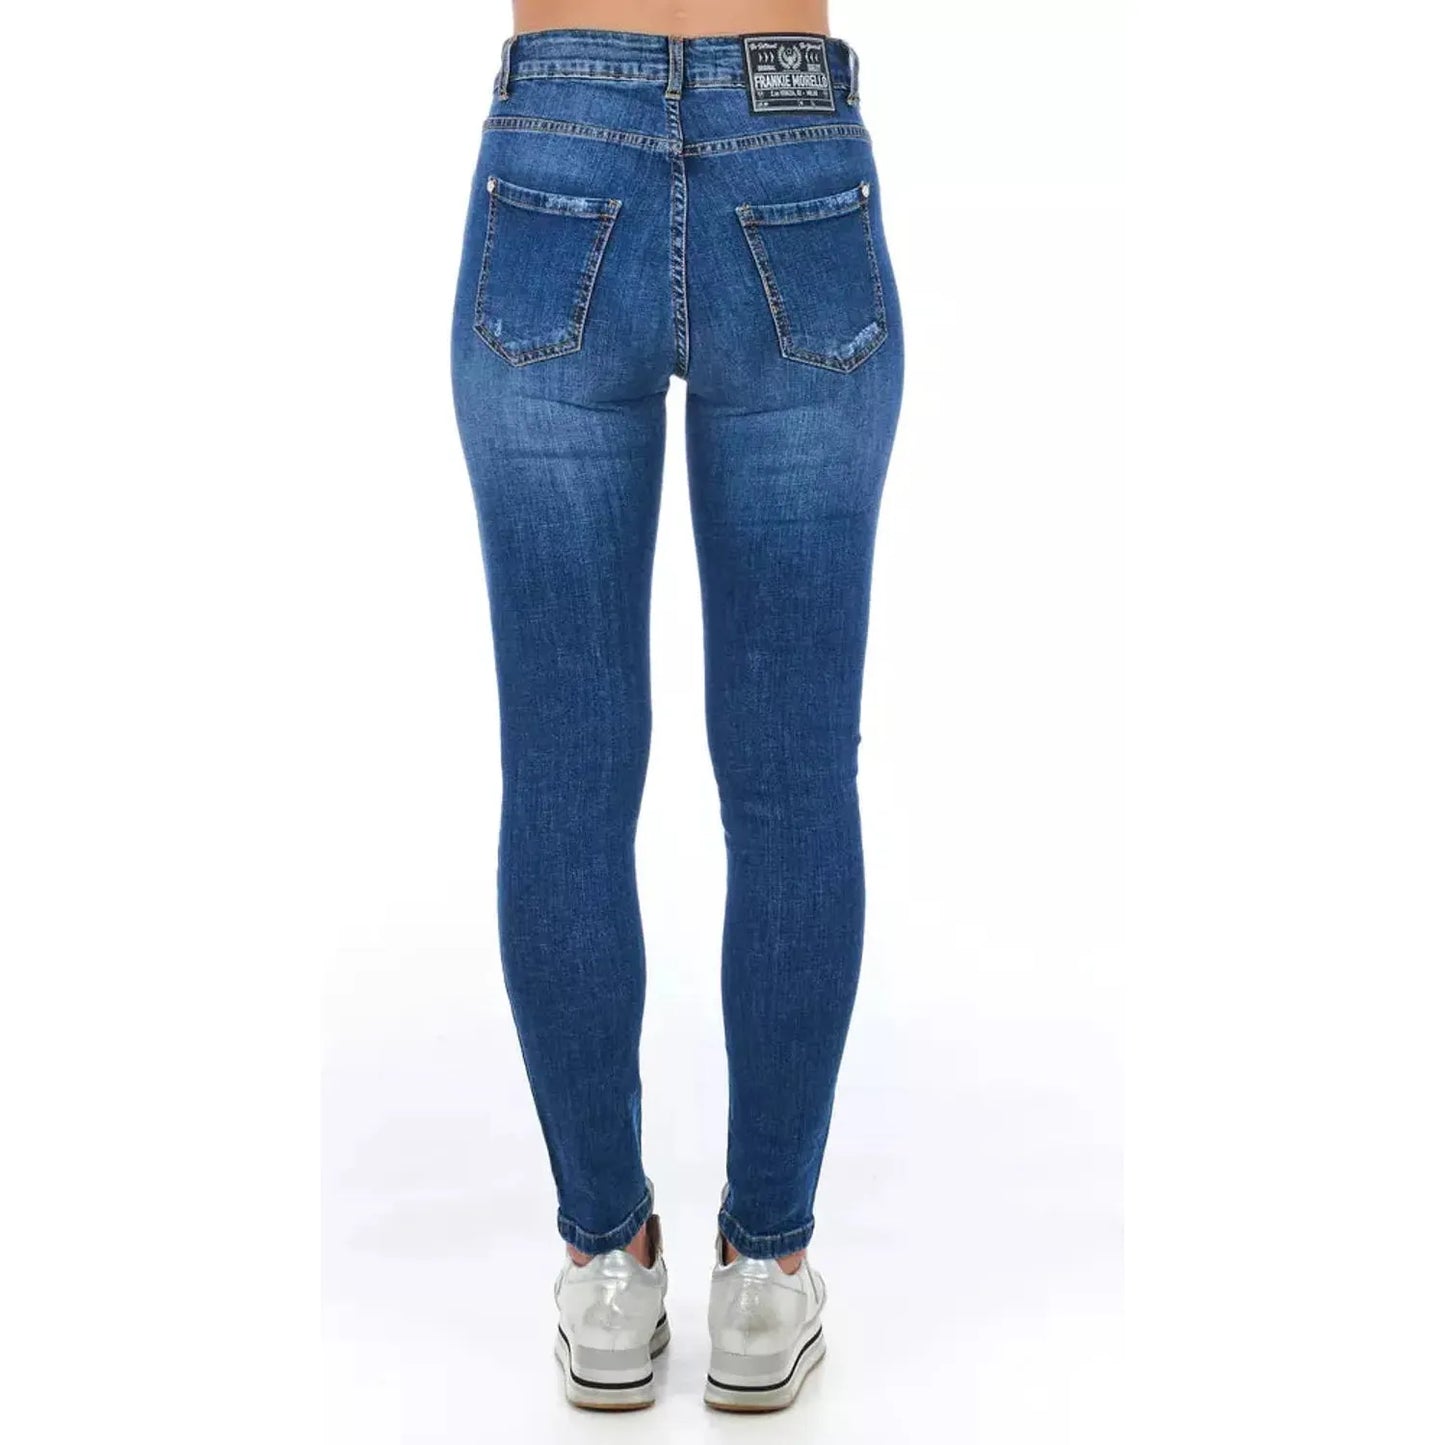 Frankie Morello Stylish Worn Wash Denim Jeans blue-jeans-pant-6 product-21770-1992294636-21-bd2fa642-c38.webp